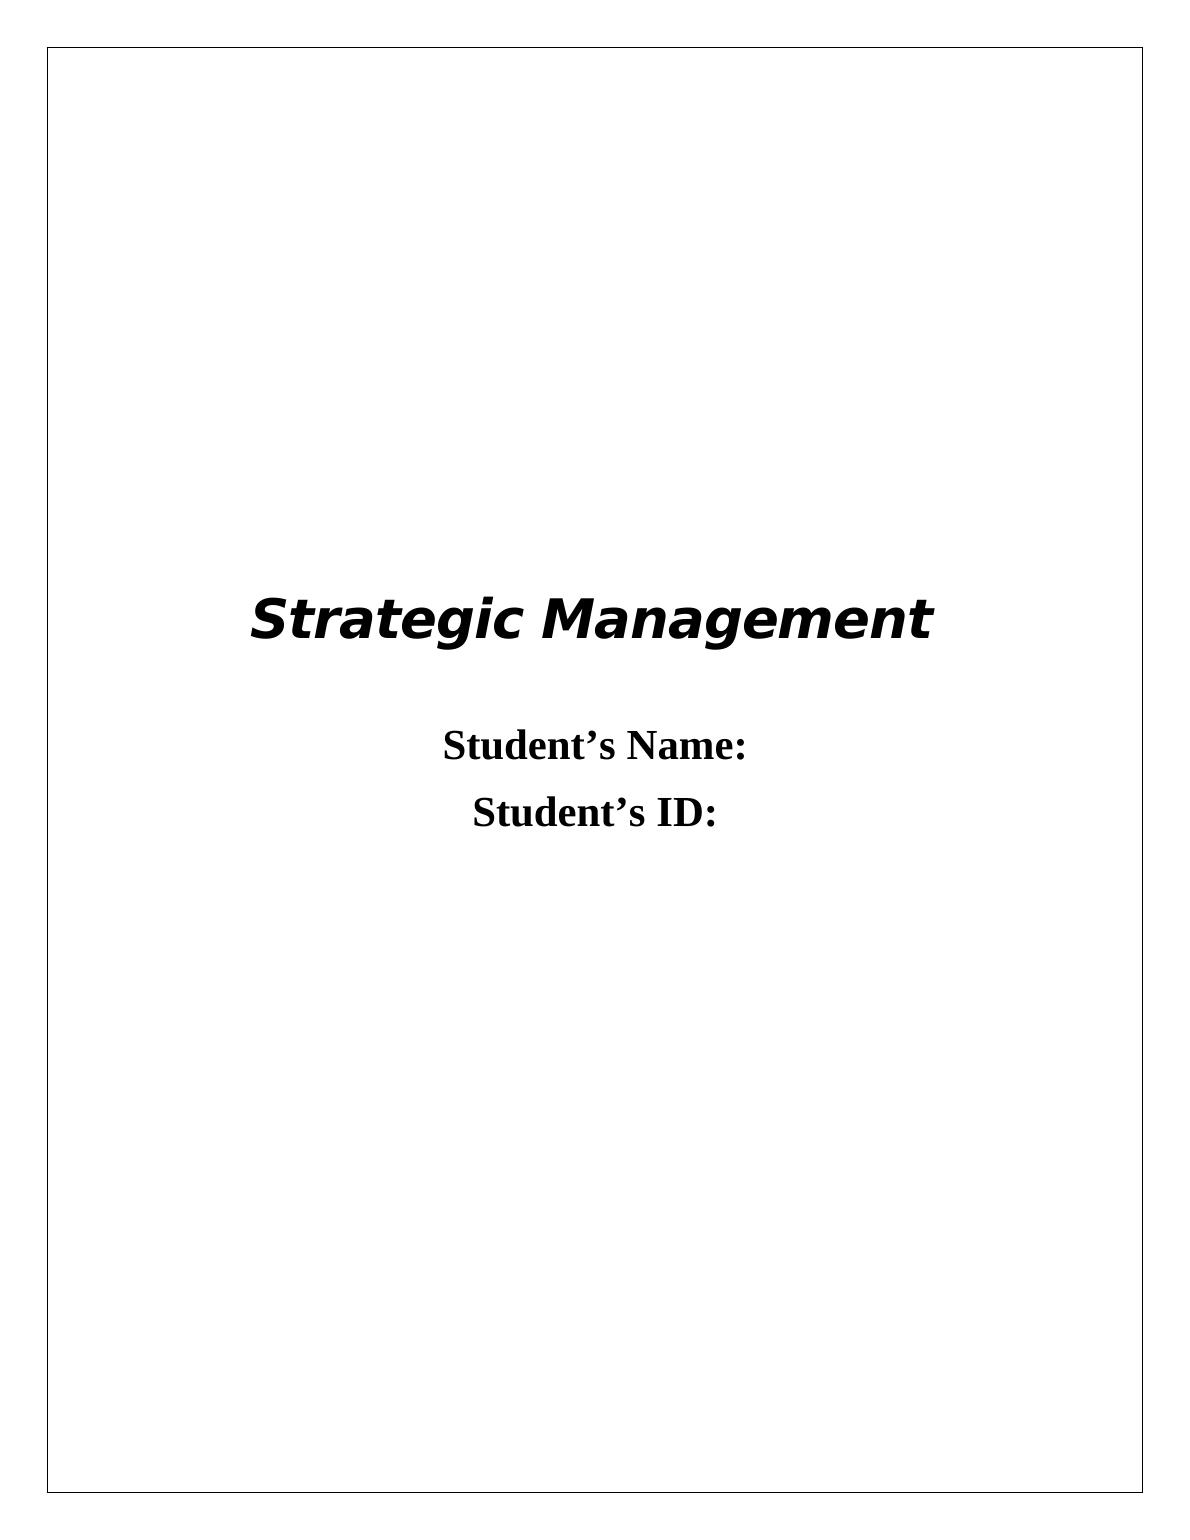 Strategic Management  Assignment Sample_1